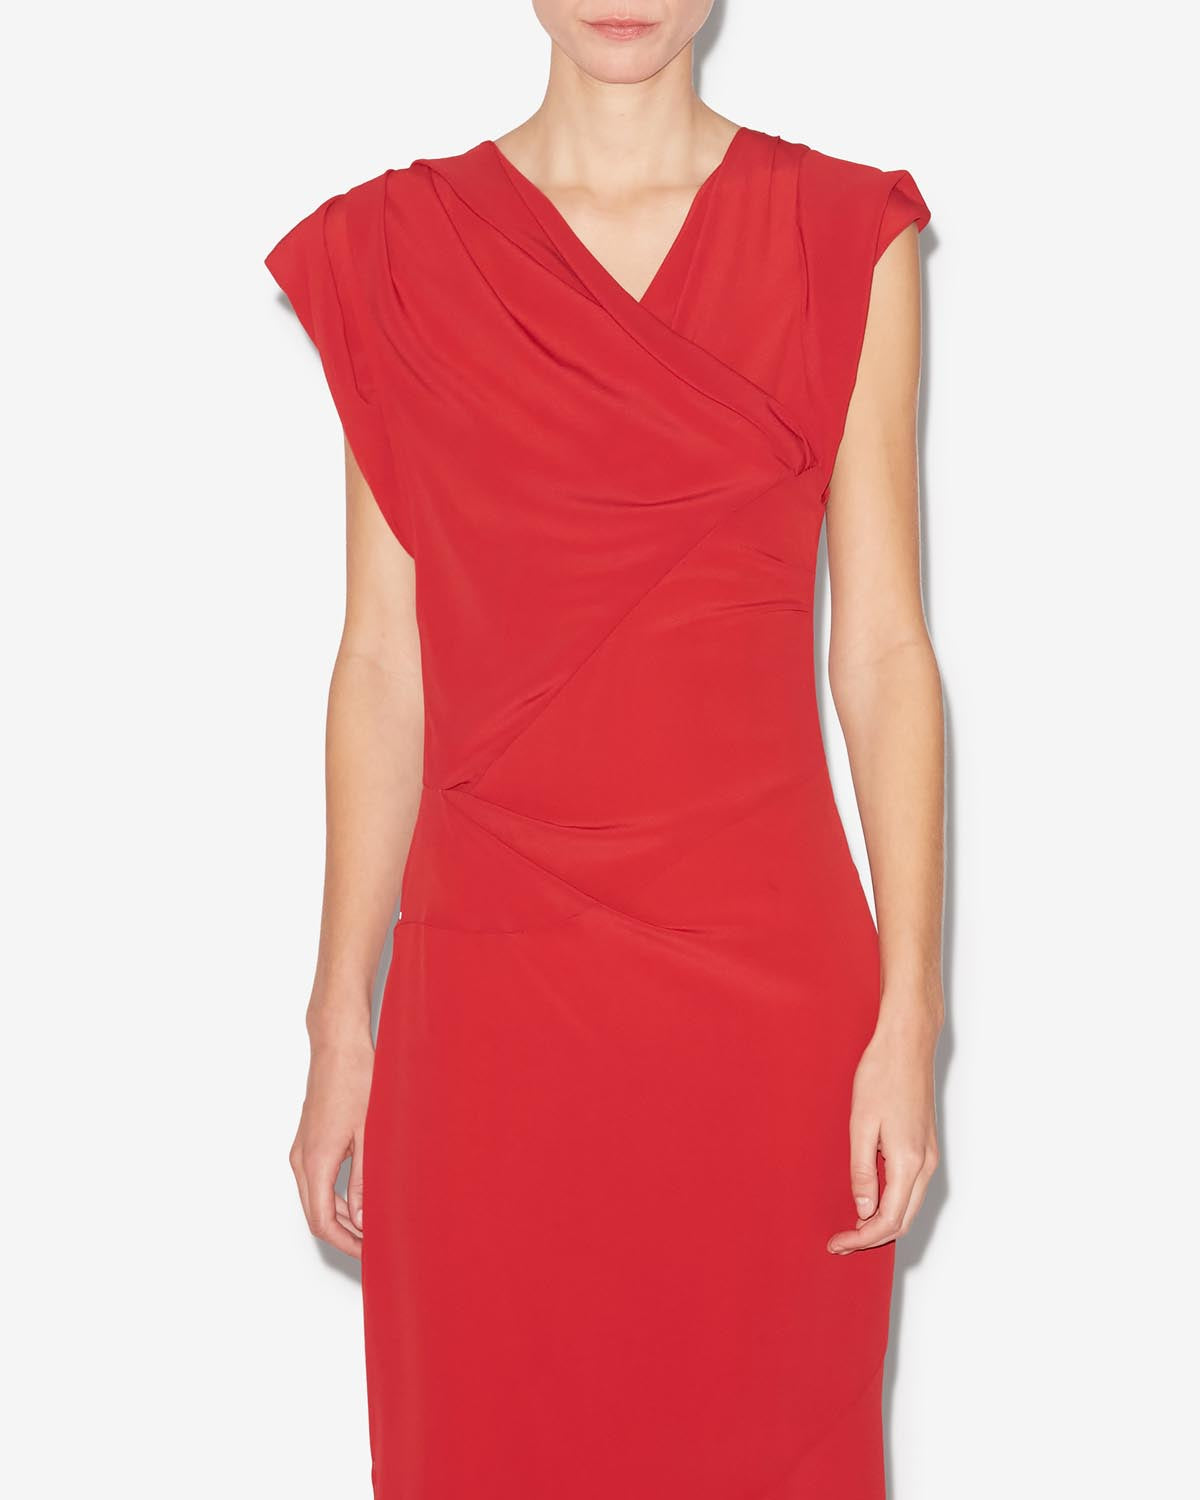 Kidena dress Woman Scarlet red 4